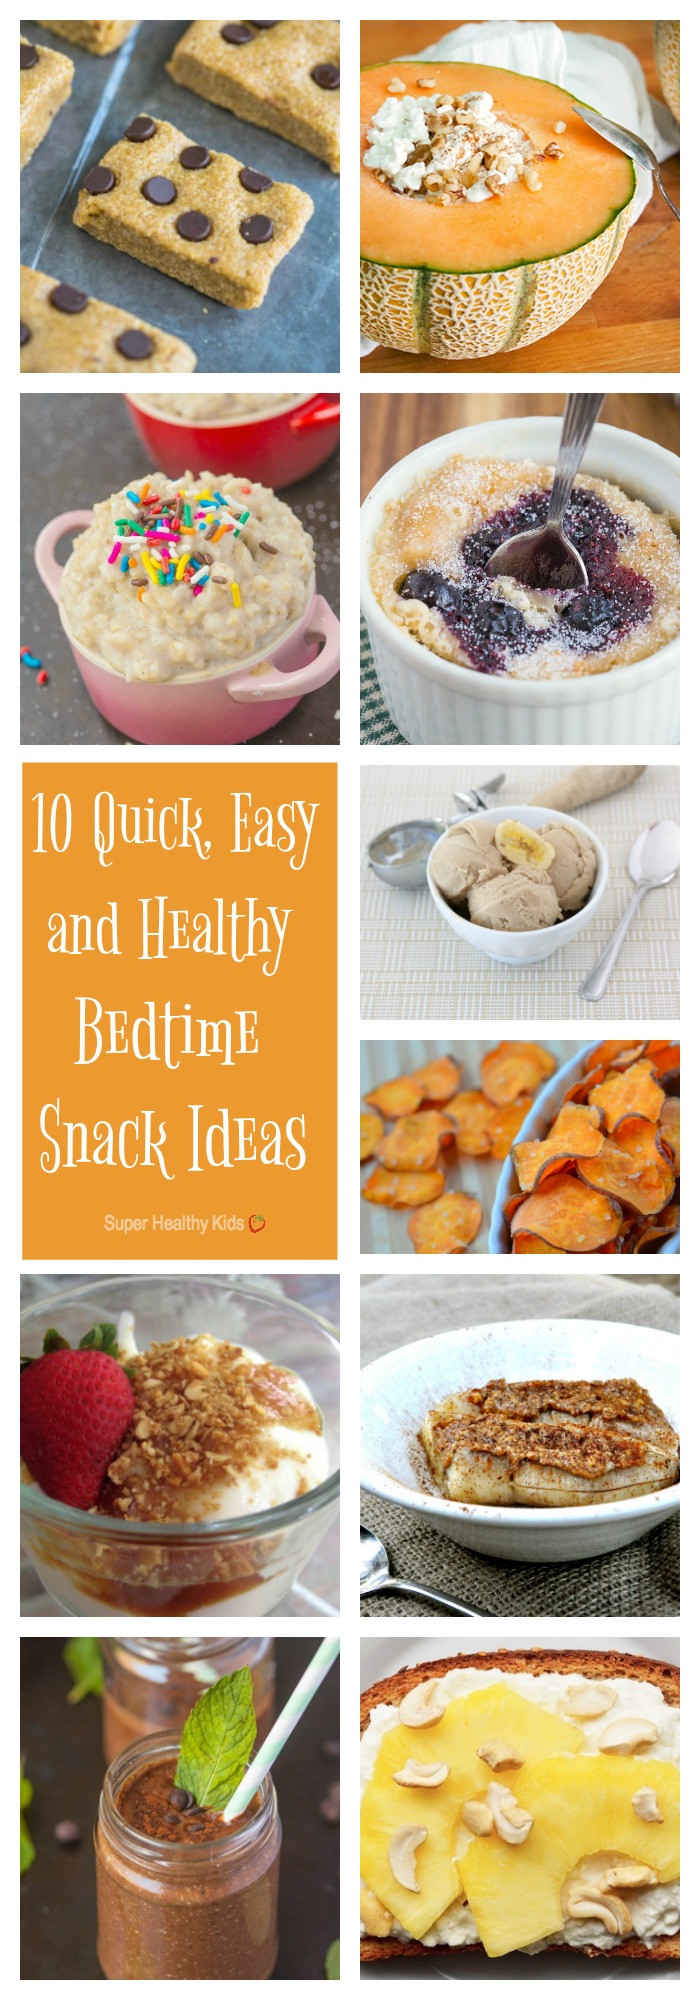 Easy Quick Healthy Snacks
 10 Quick Easy and Healthy Bedtime Snack Ideas